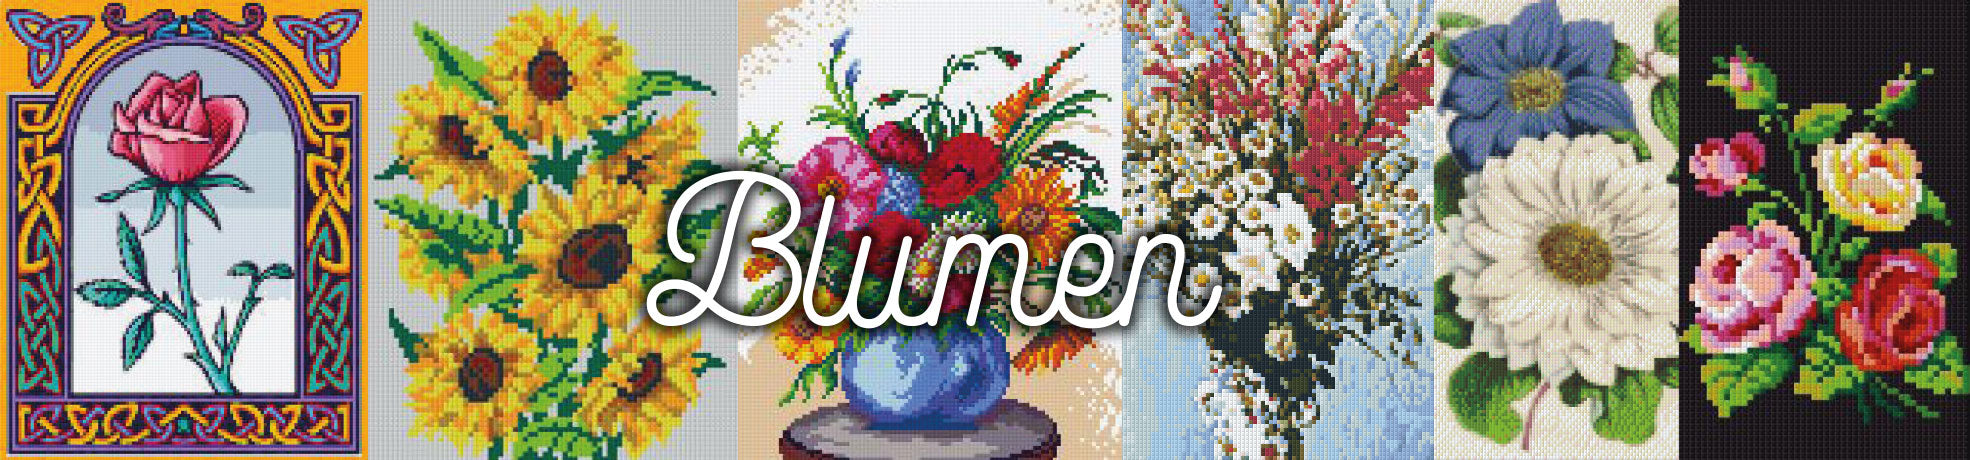 Pixel Klassik Vorlagen - Blumen & Pflanzen